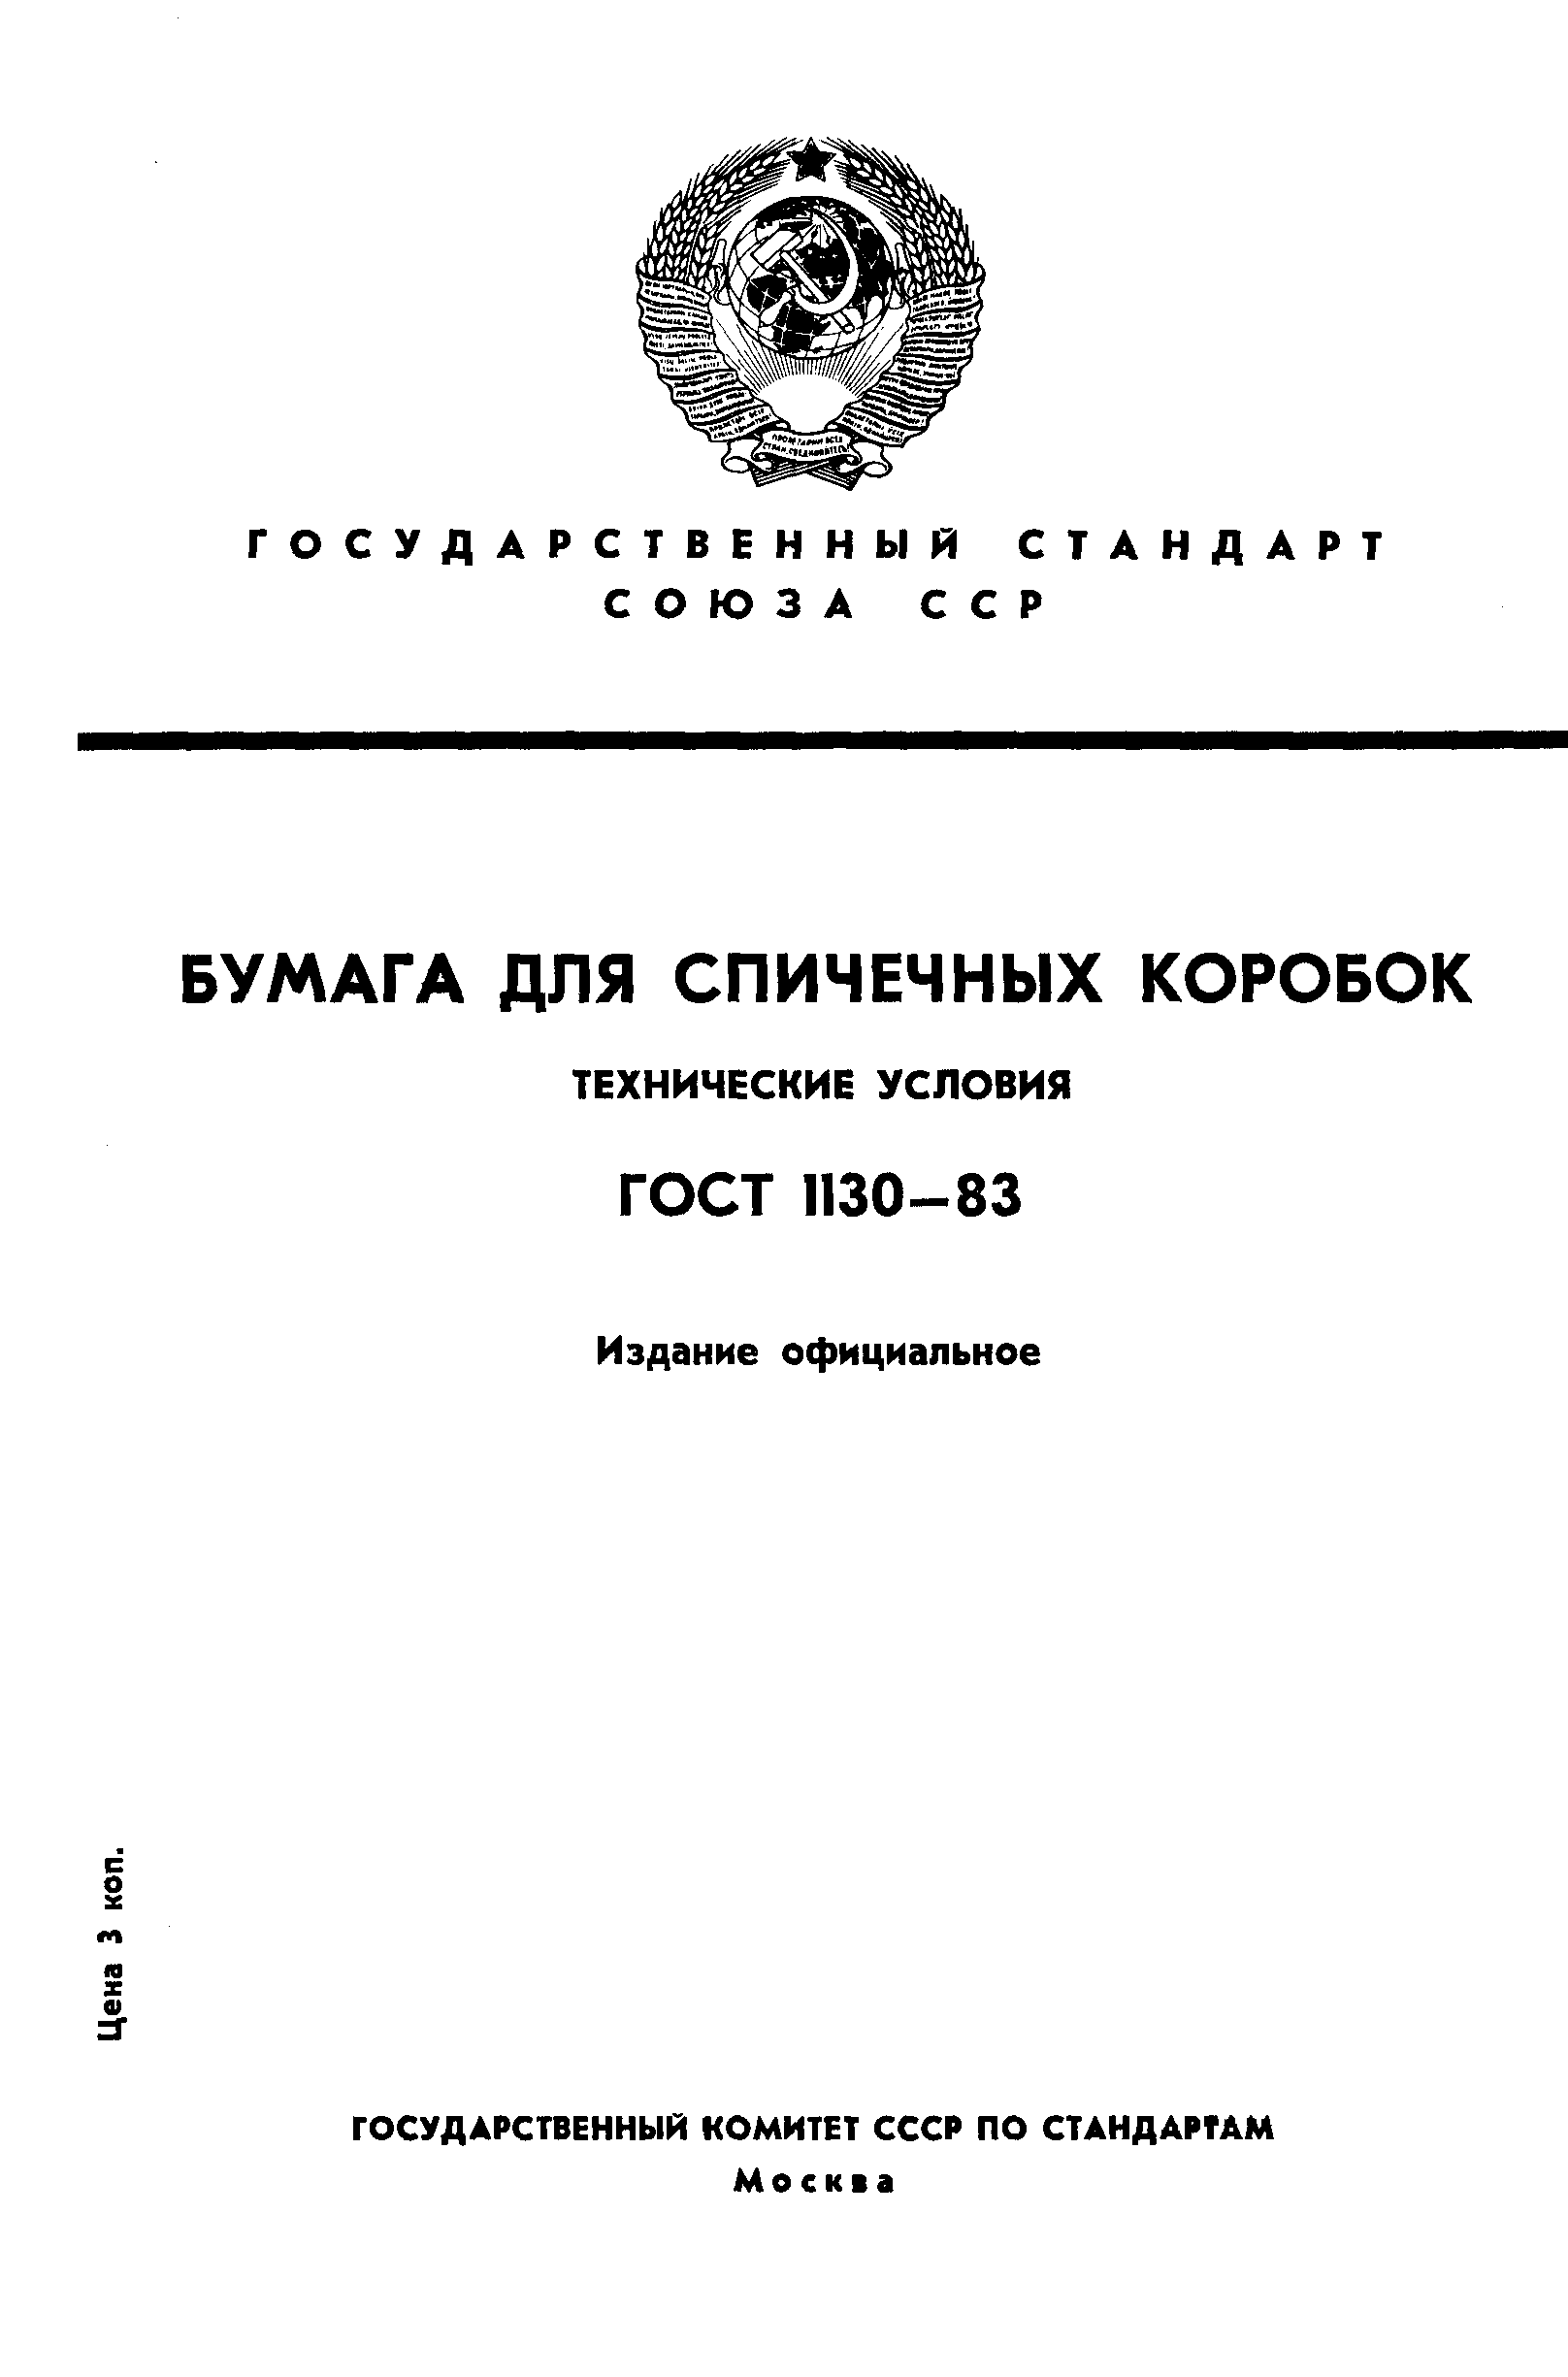 ГОСТ 1130-83